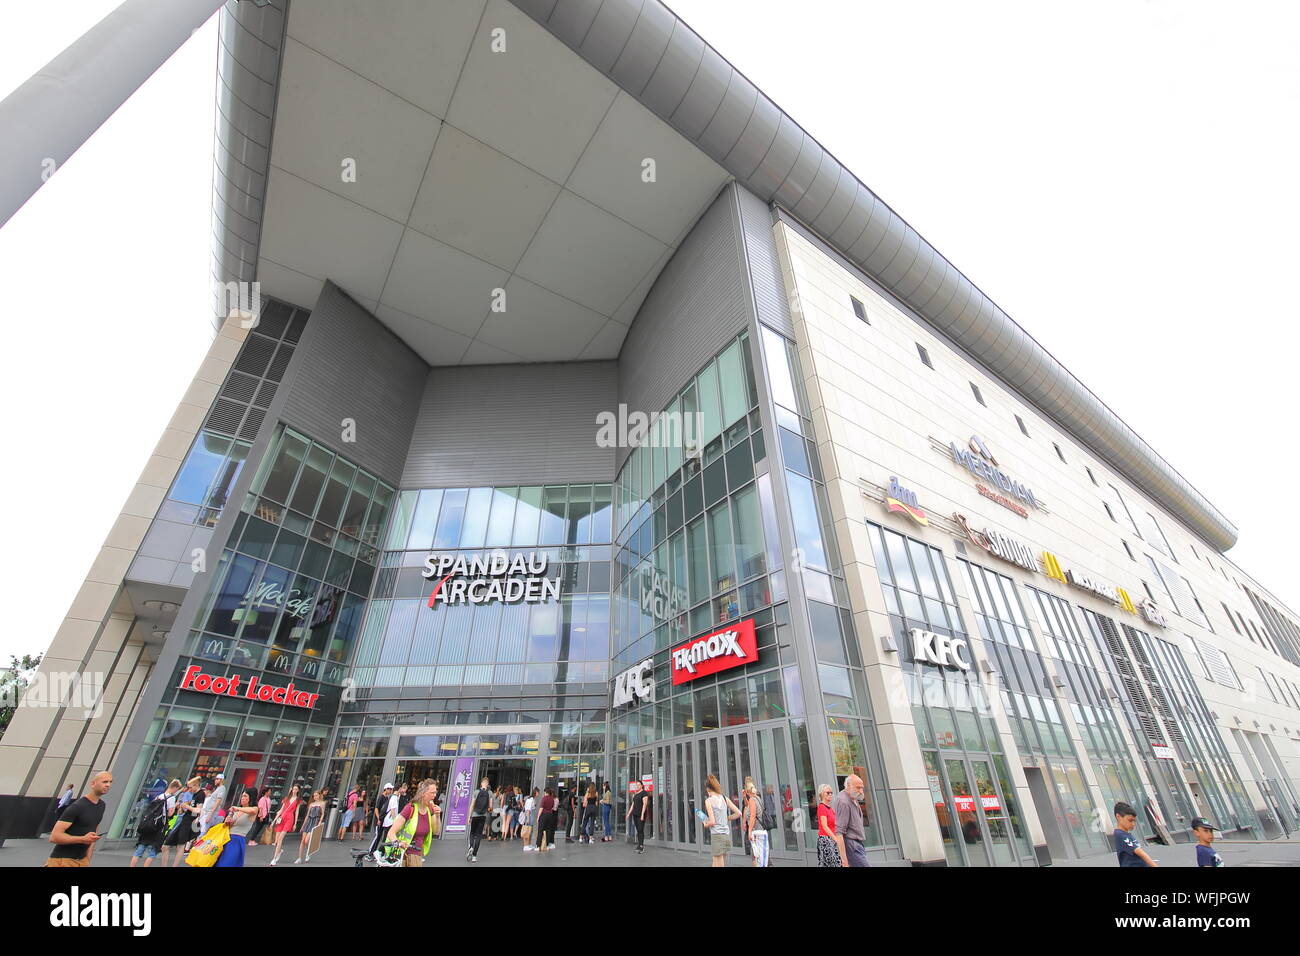 People visit Spandau Arcaden shopping mall Berlin Germany Stock Photo